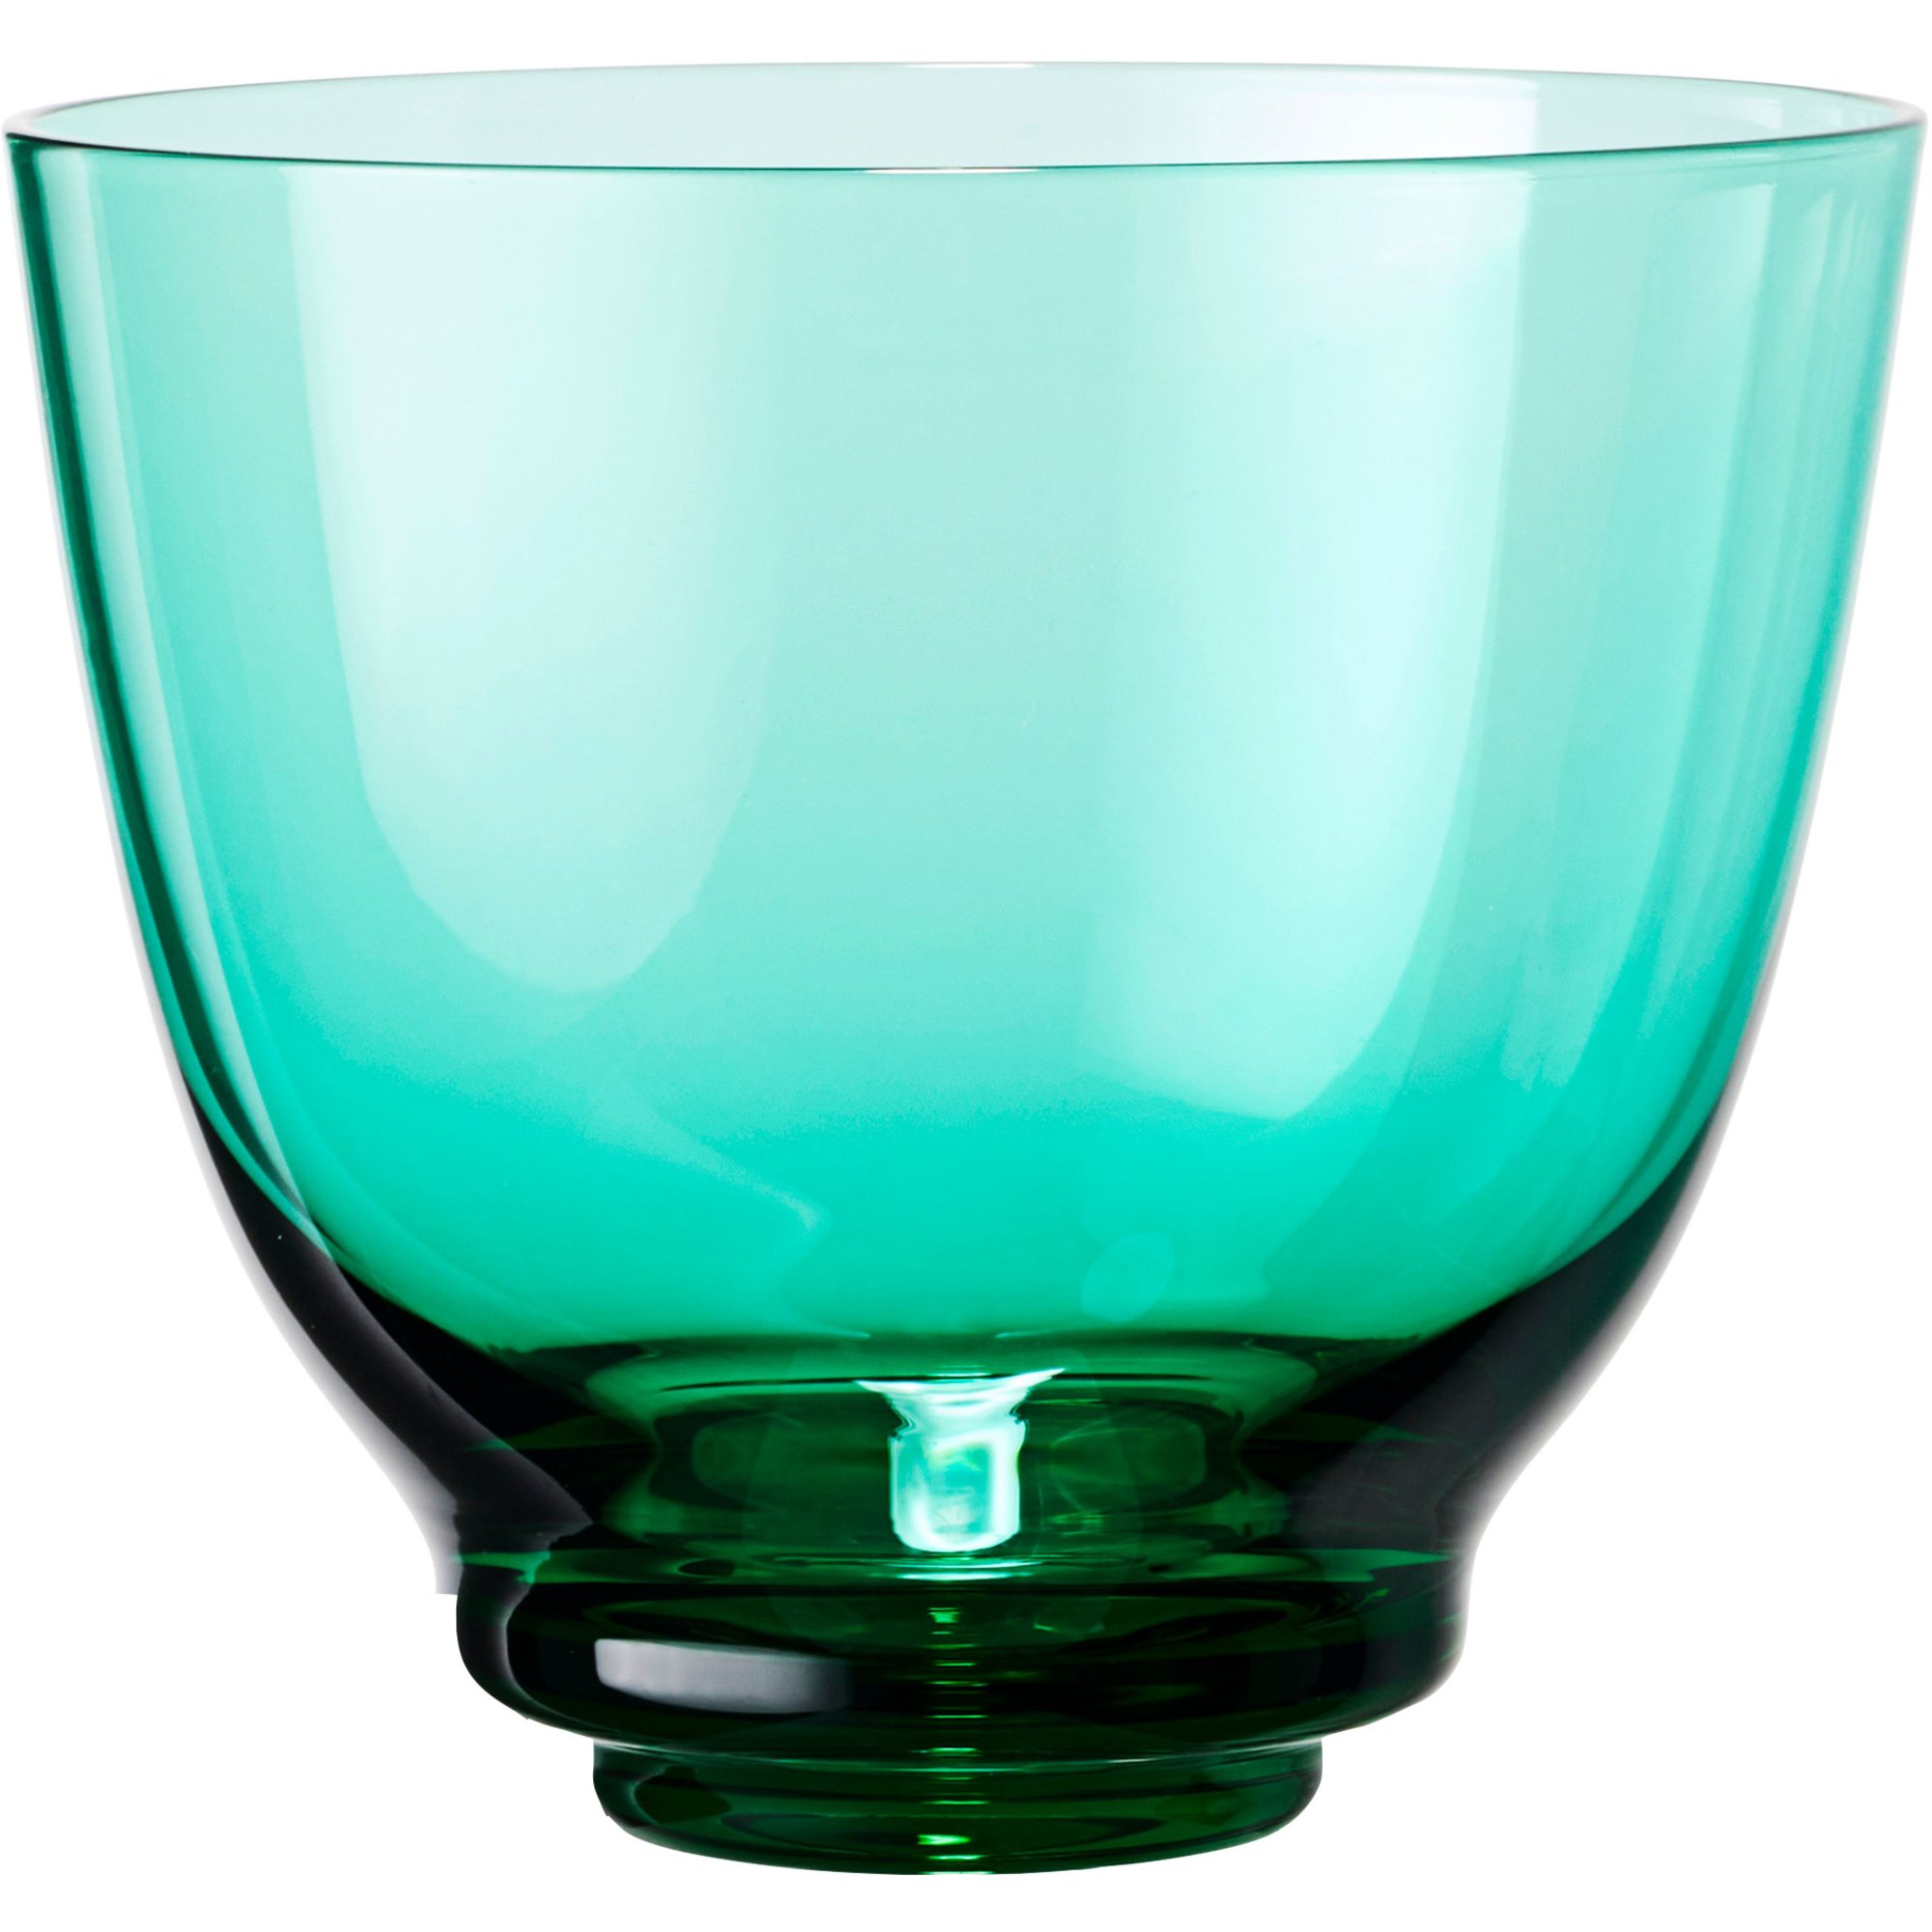 10: Holmegaard Flow vandglas 35 cl, emerald green